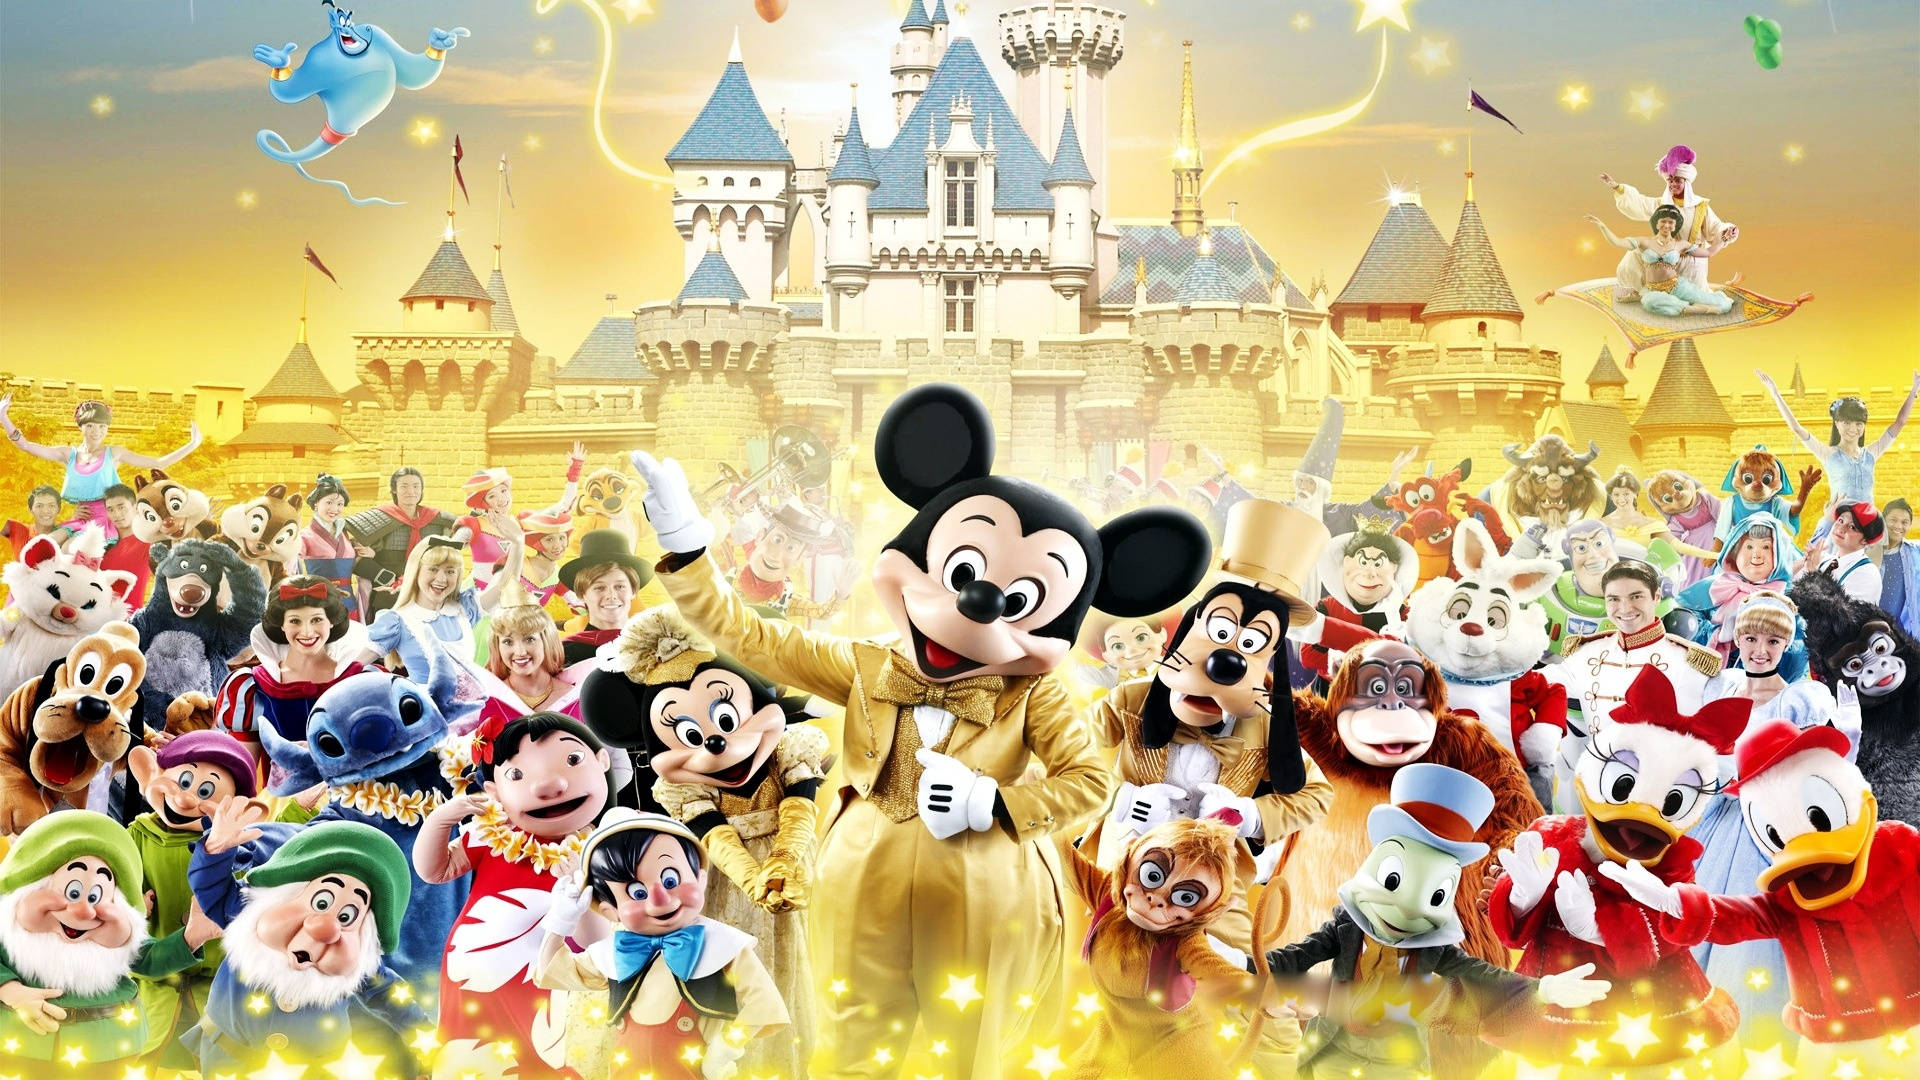 Disney 1920x1080 Hd Disney Mascots And Castle Background